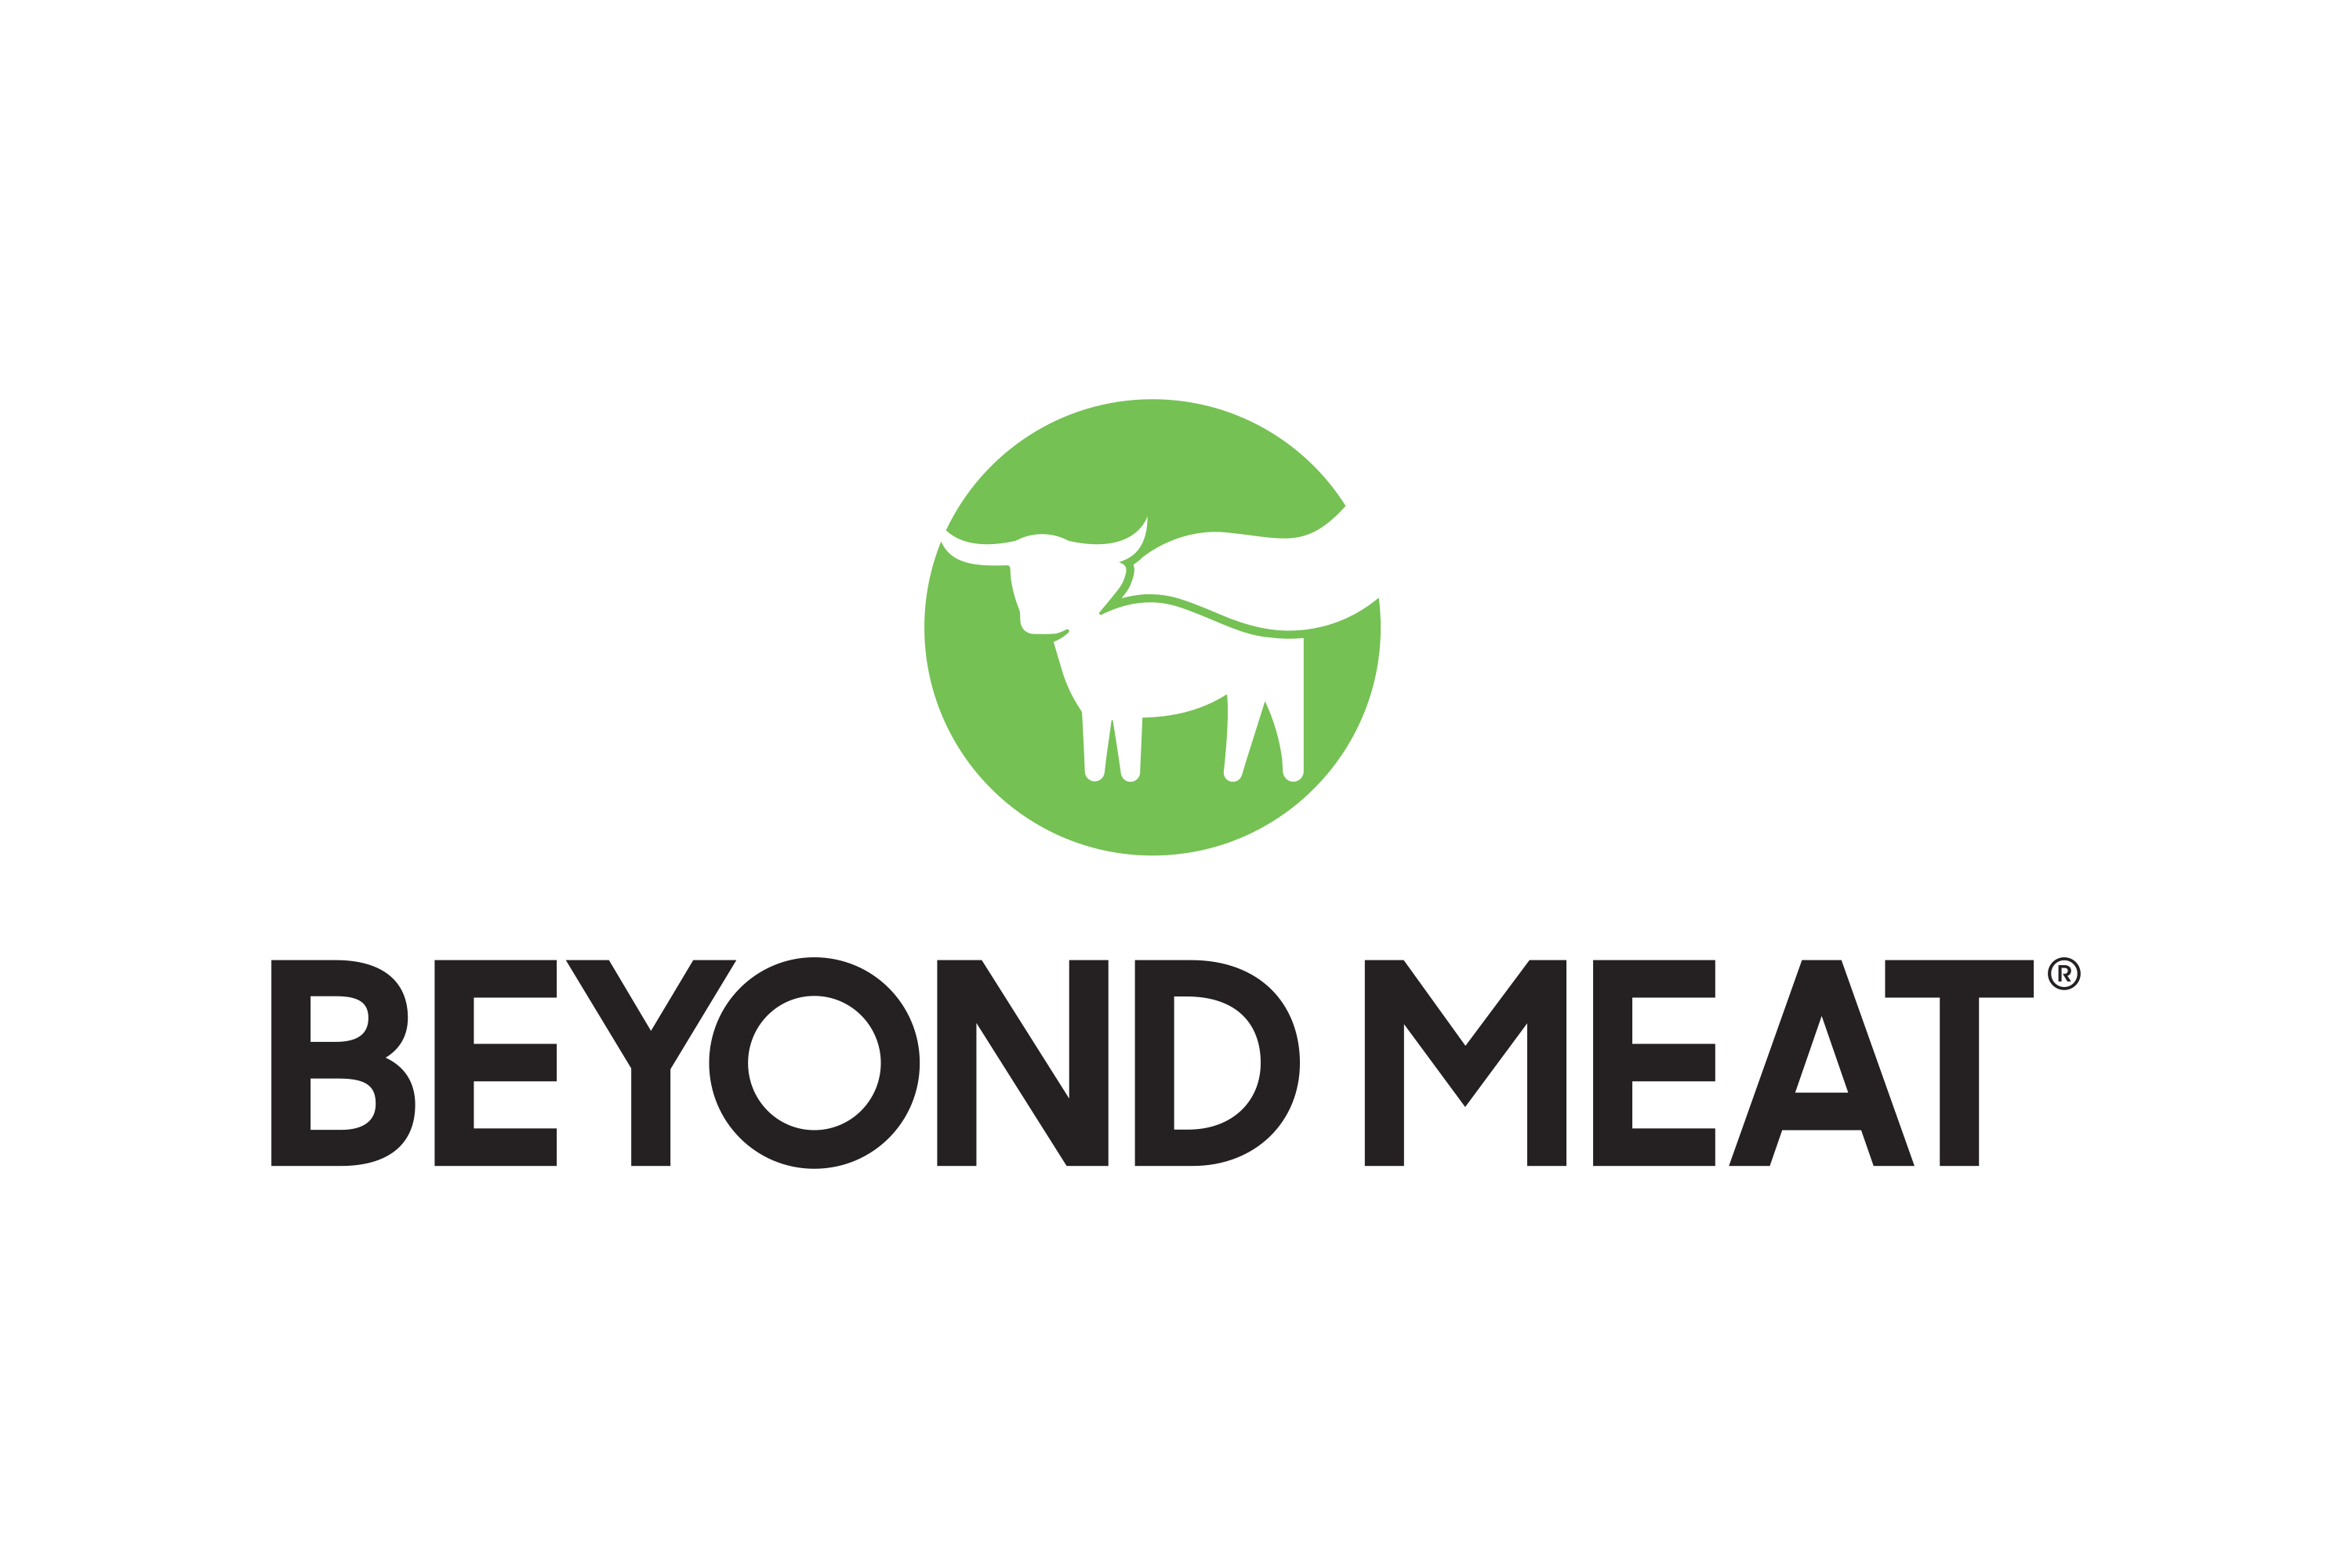 Download Beyond Meat Logo in SVG Vector or PNG File Format 